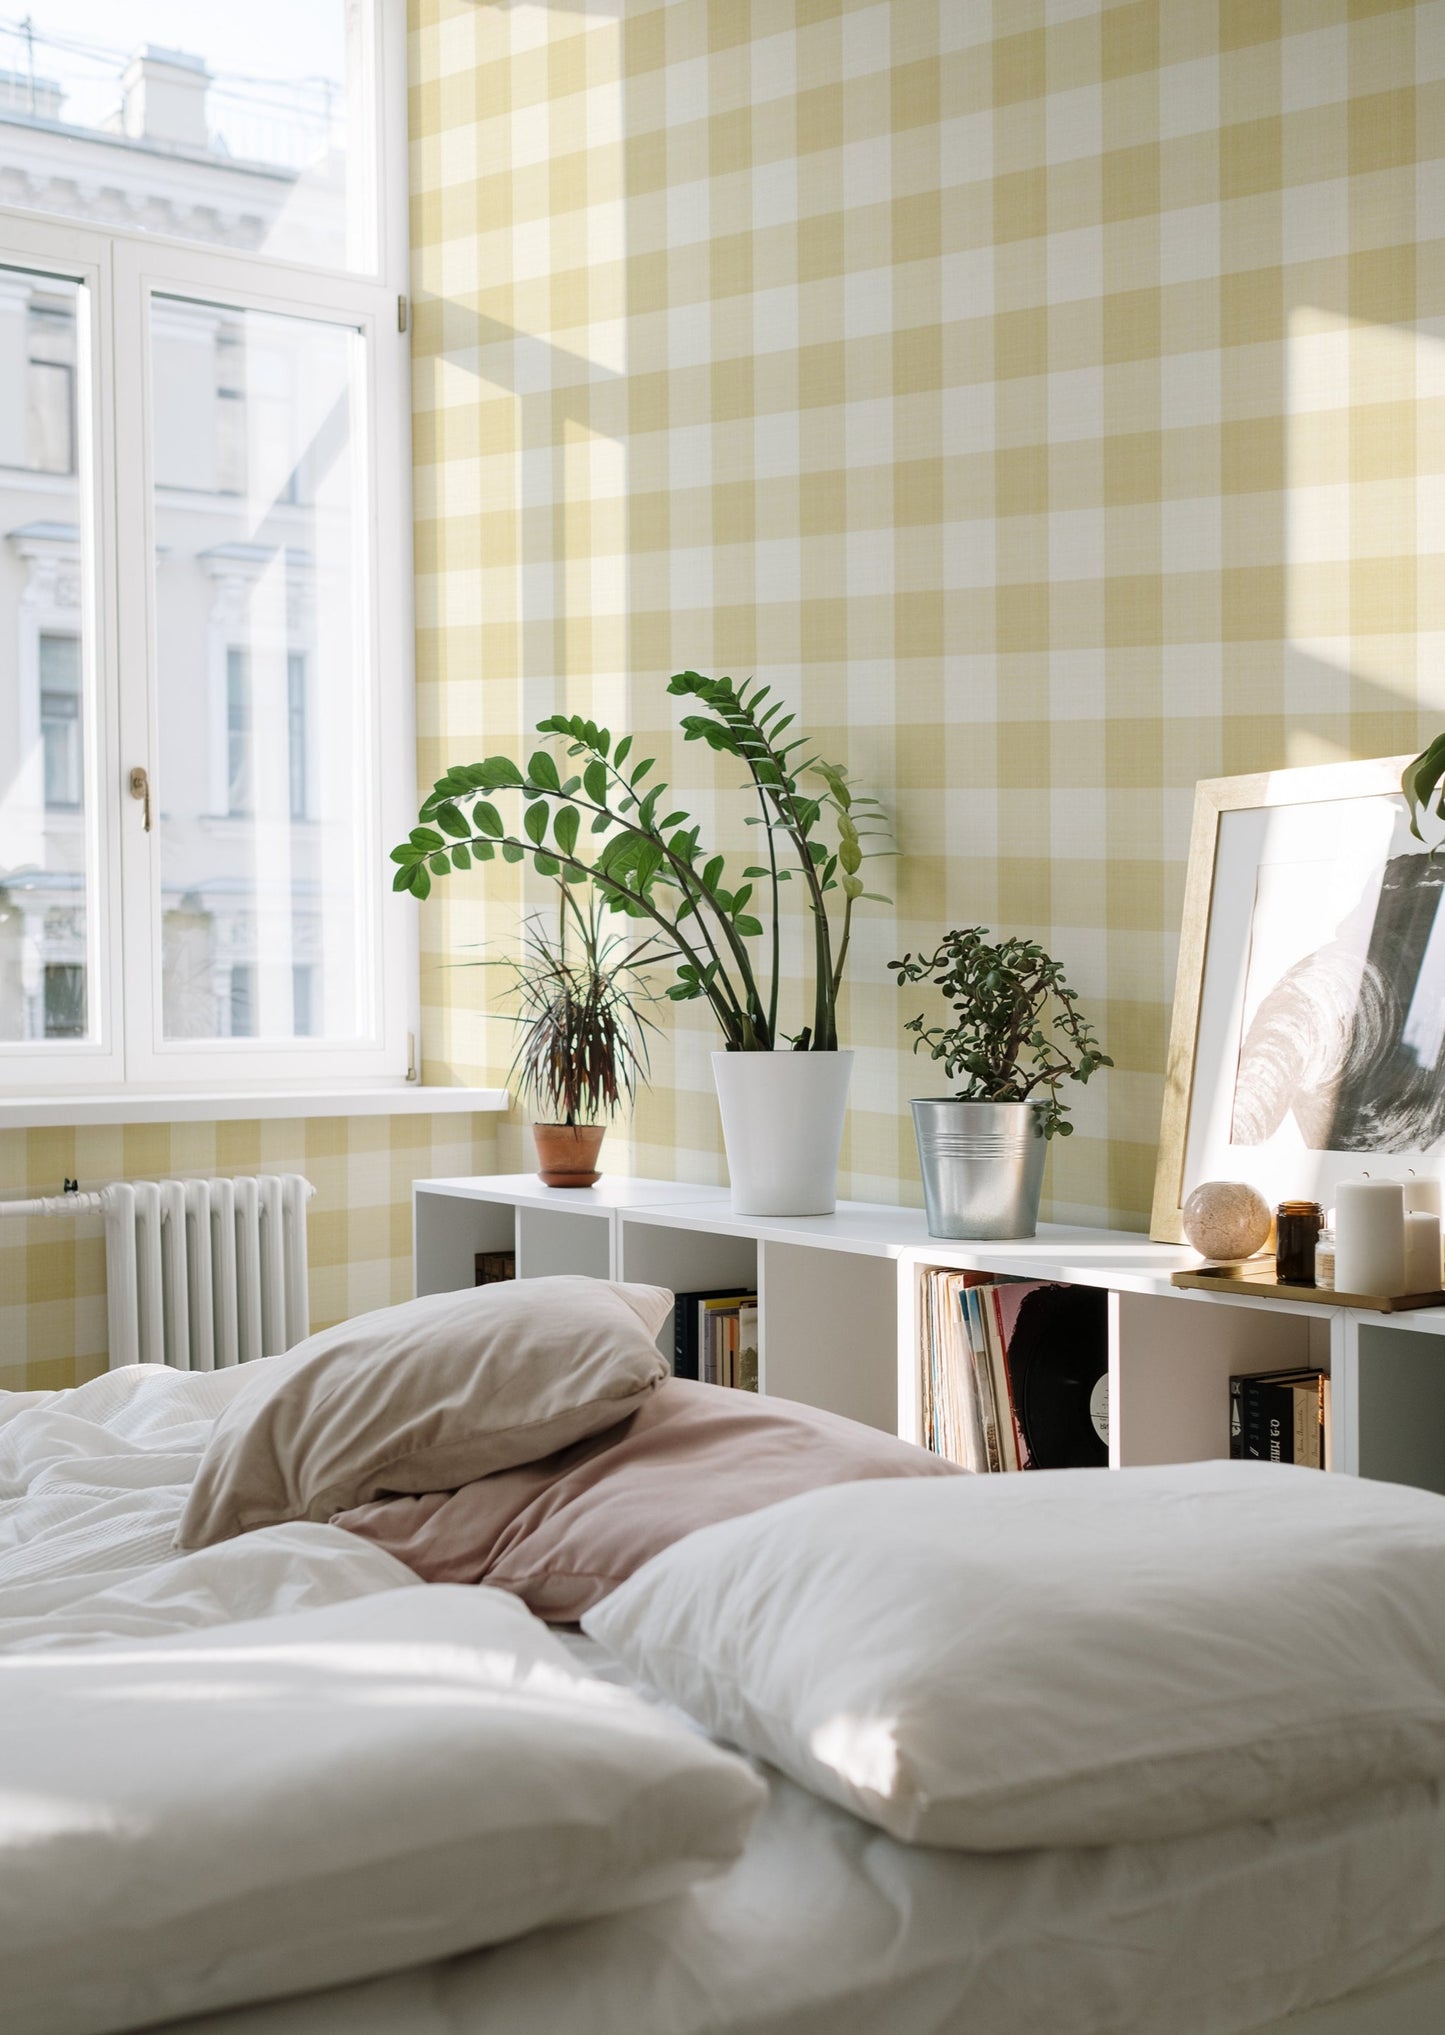 Wallpaper Checks - Linen - Yellow